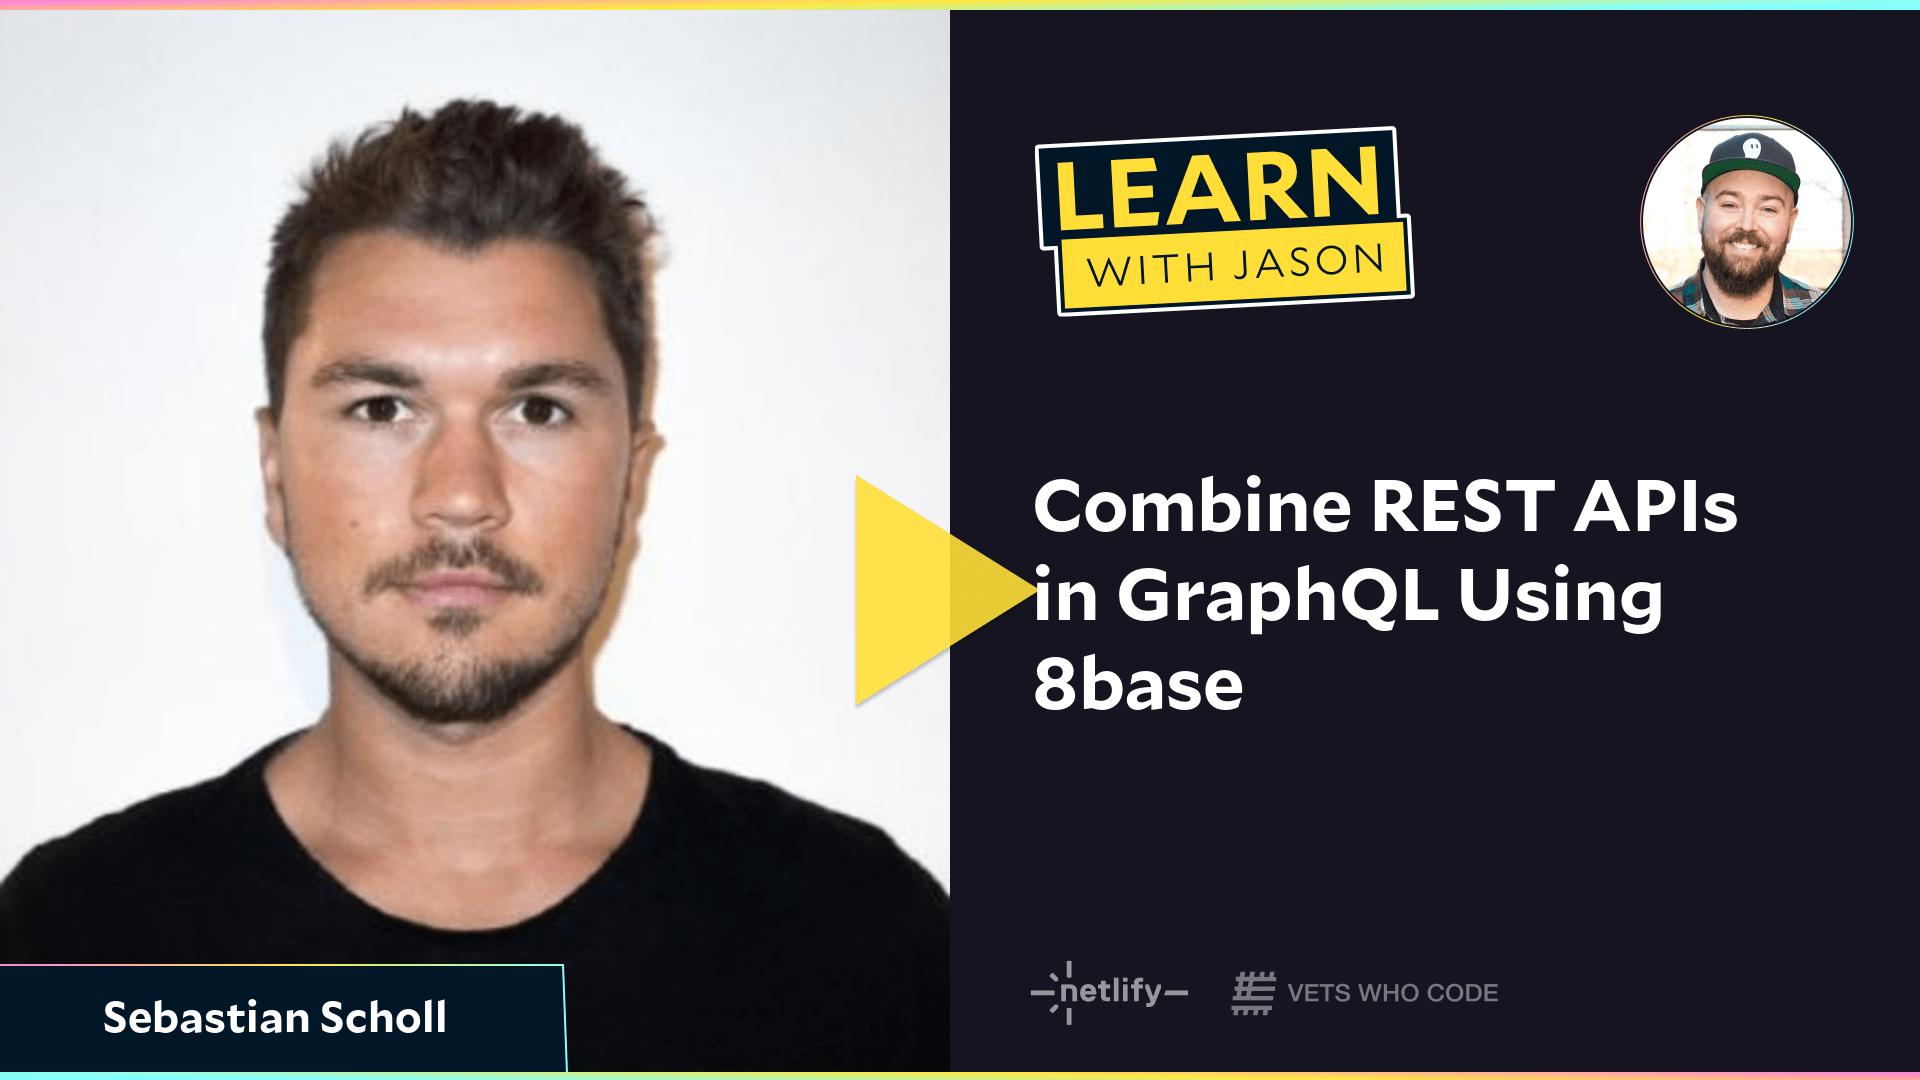 Combine REST APIs in GraphQL Using 8base (with Sebastian Scholl)